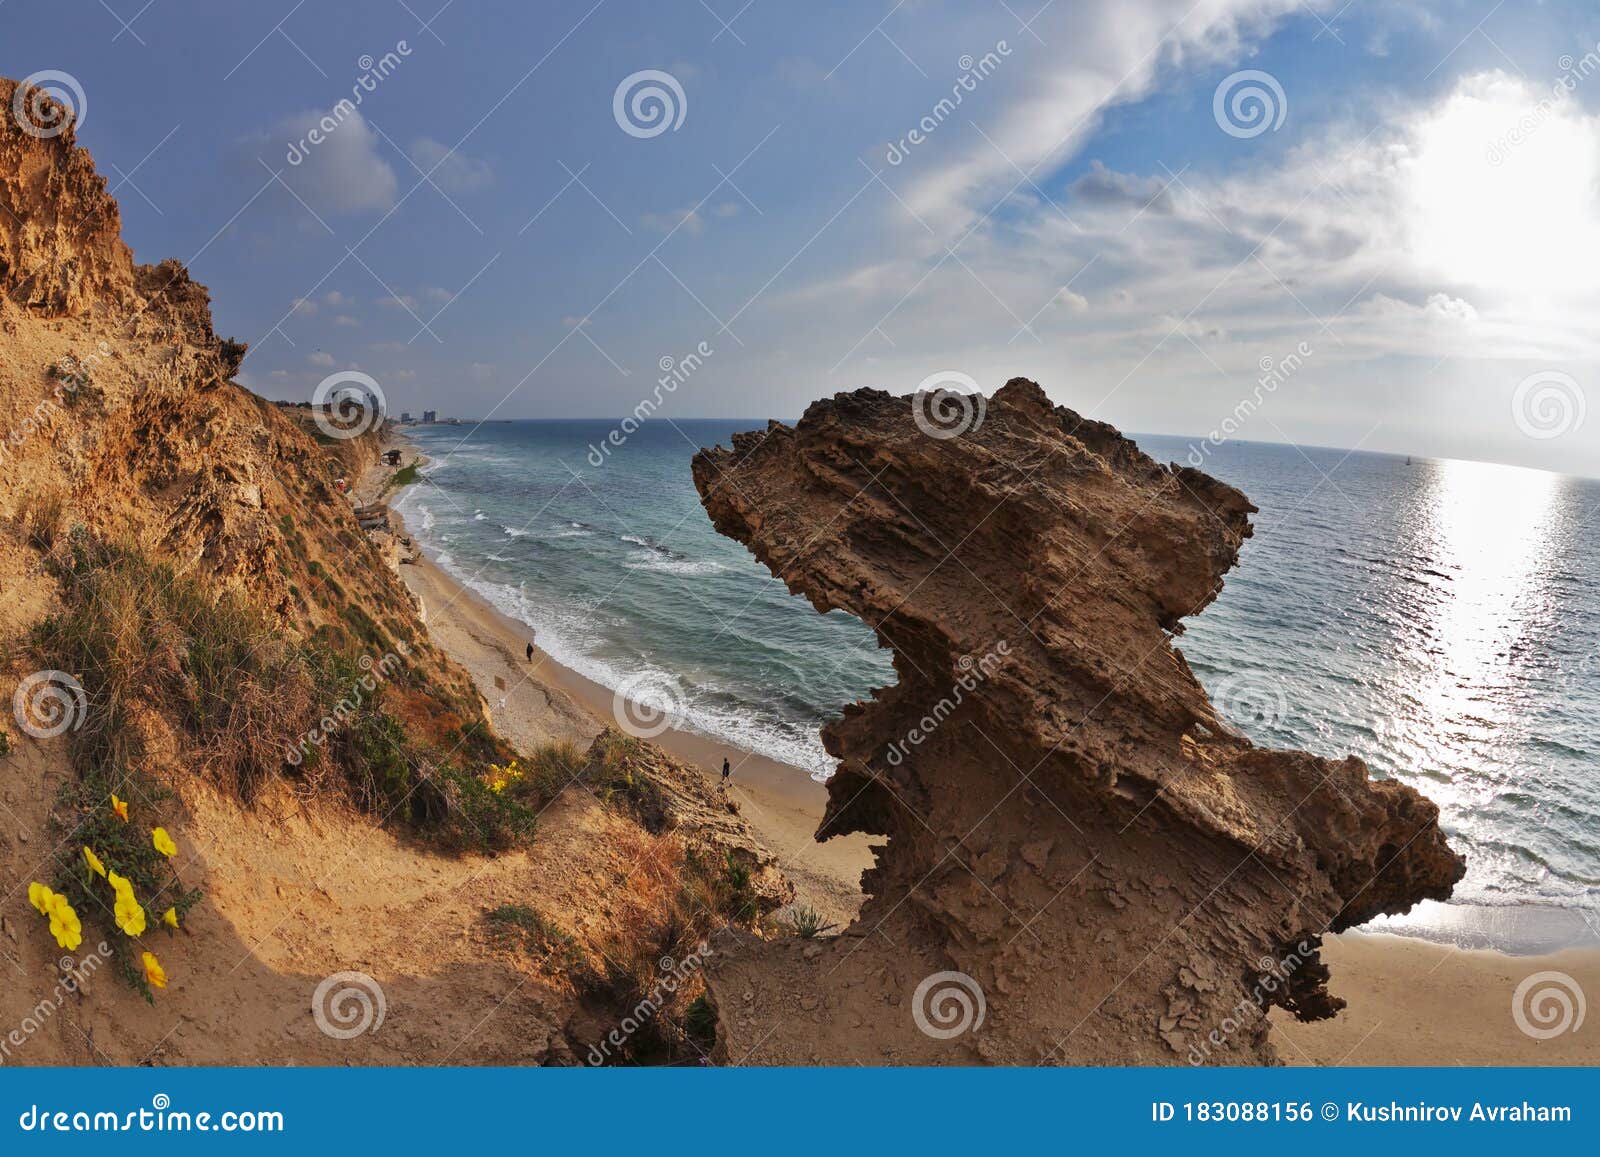 freakish rocks on coast of mediterranean sea